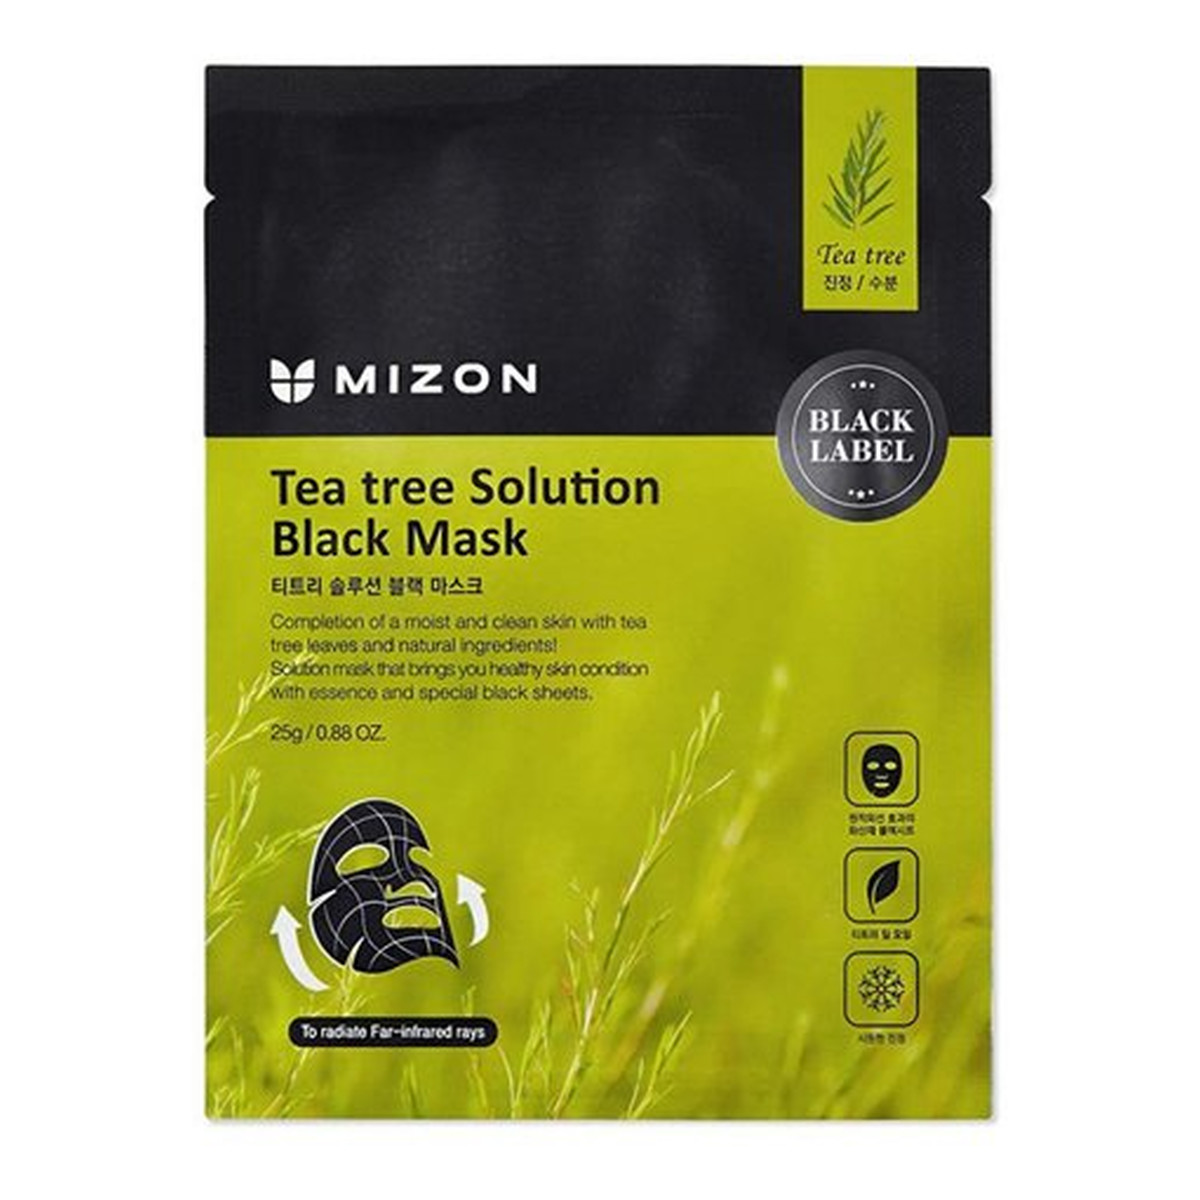 Mizon Tea Tree Solution Black Mask maska na czarnym płacie 25g